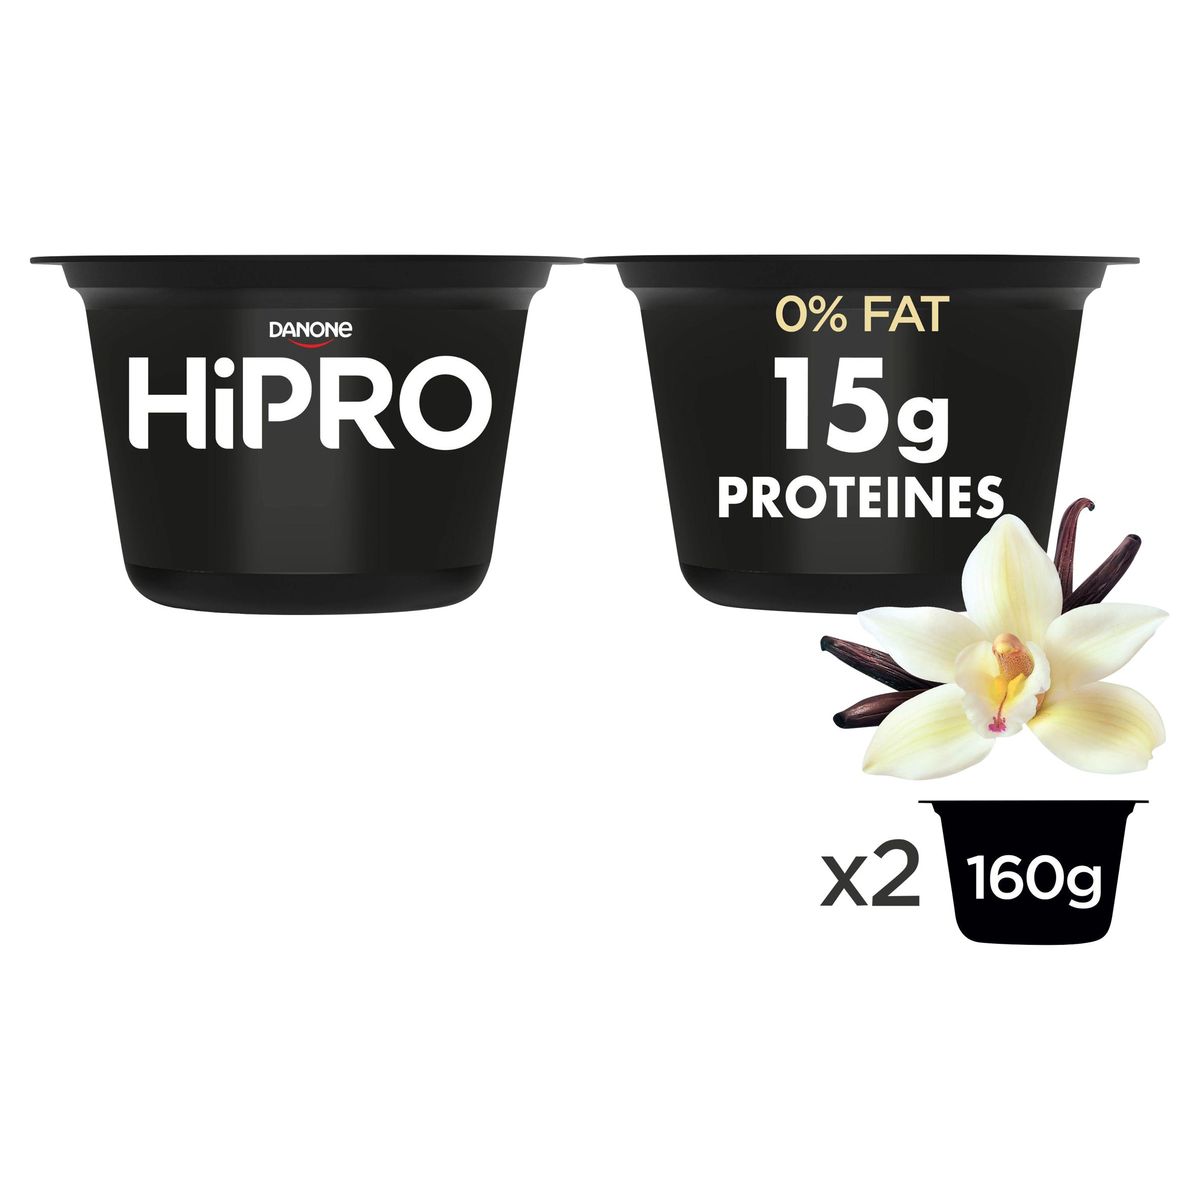 HiPRO Produits Laitiers 15g Proteines Saveur Vanille 0% m.g. 2x160 g